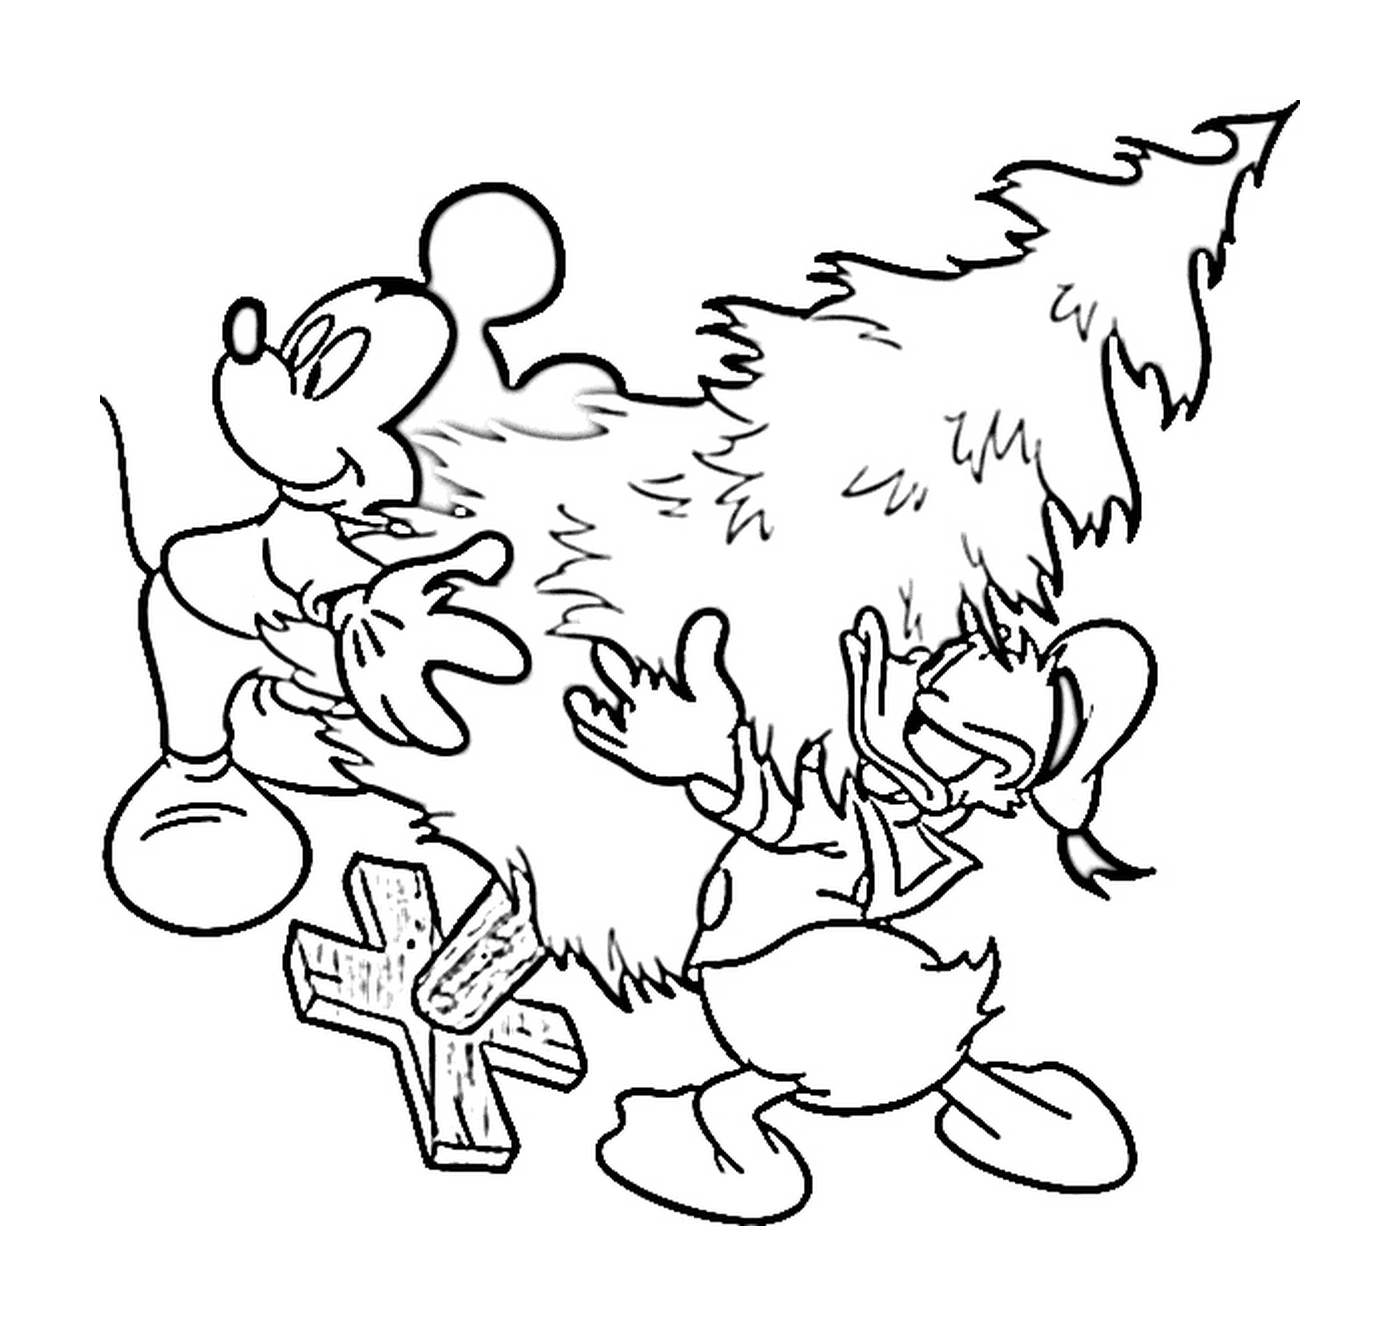  Cartoon character of Goofy 